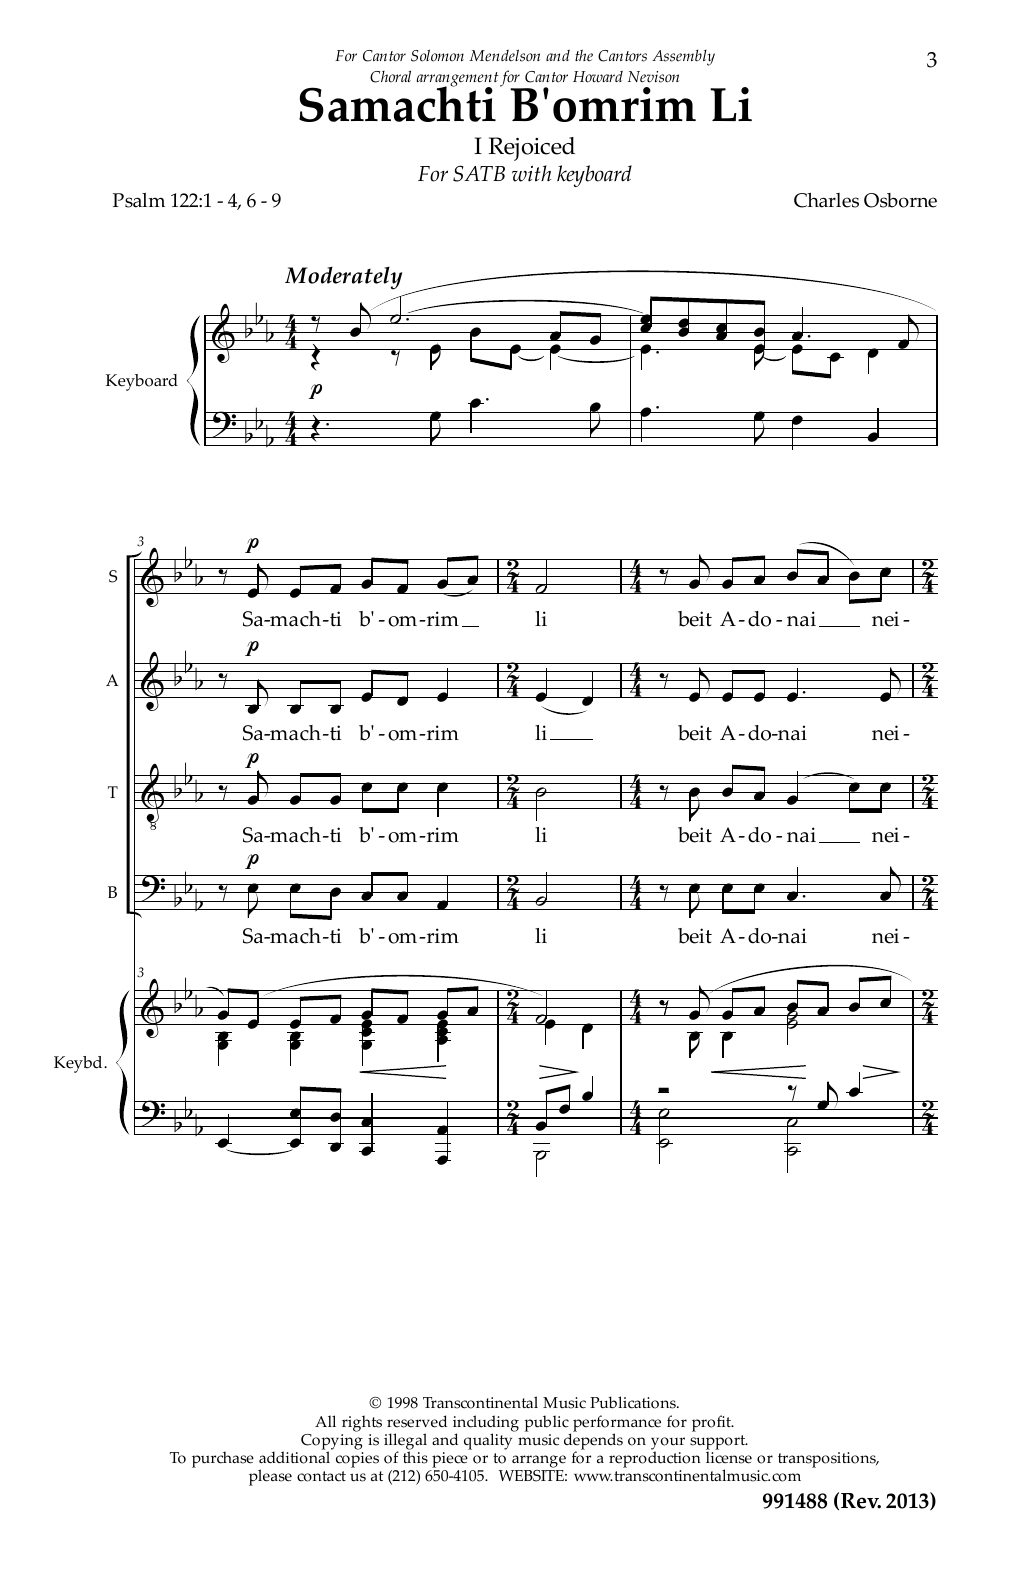 Charles Osborne Samachti B'omrim Li Sheet Music Notes & Chords for SATB Choir - Download or Print PDF